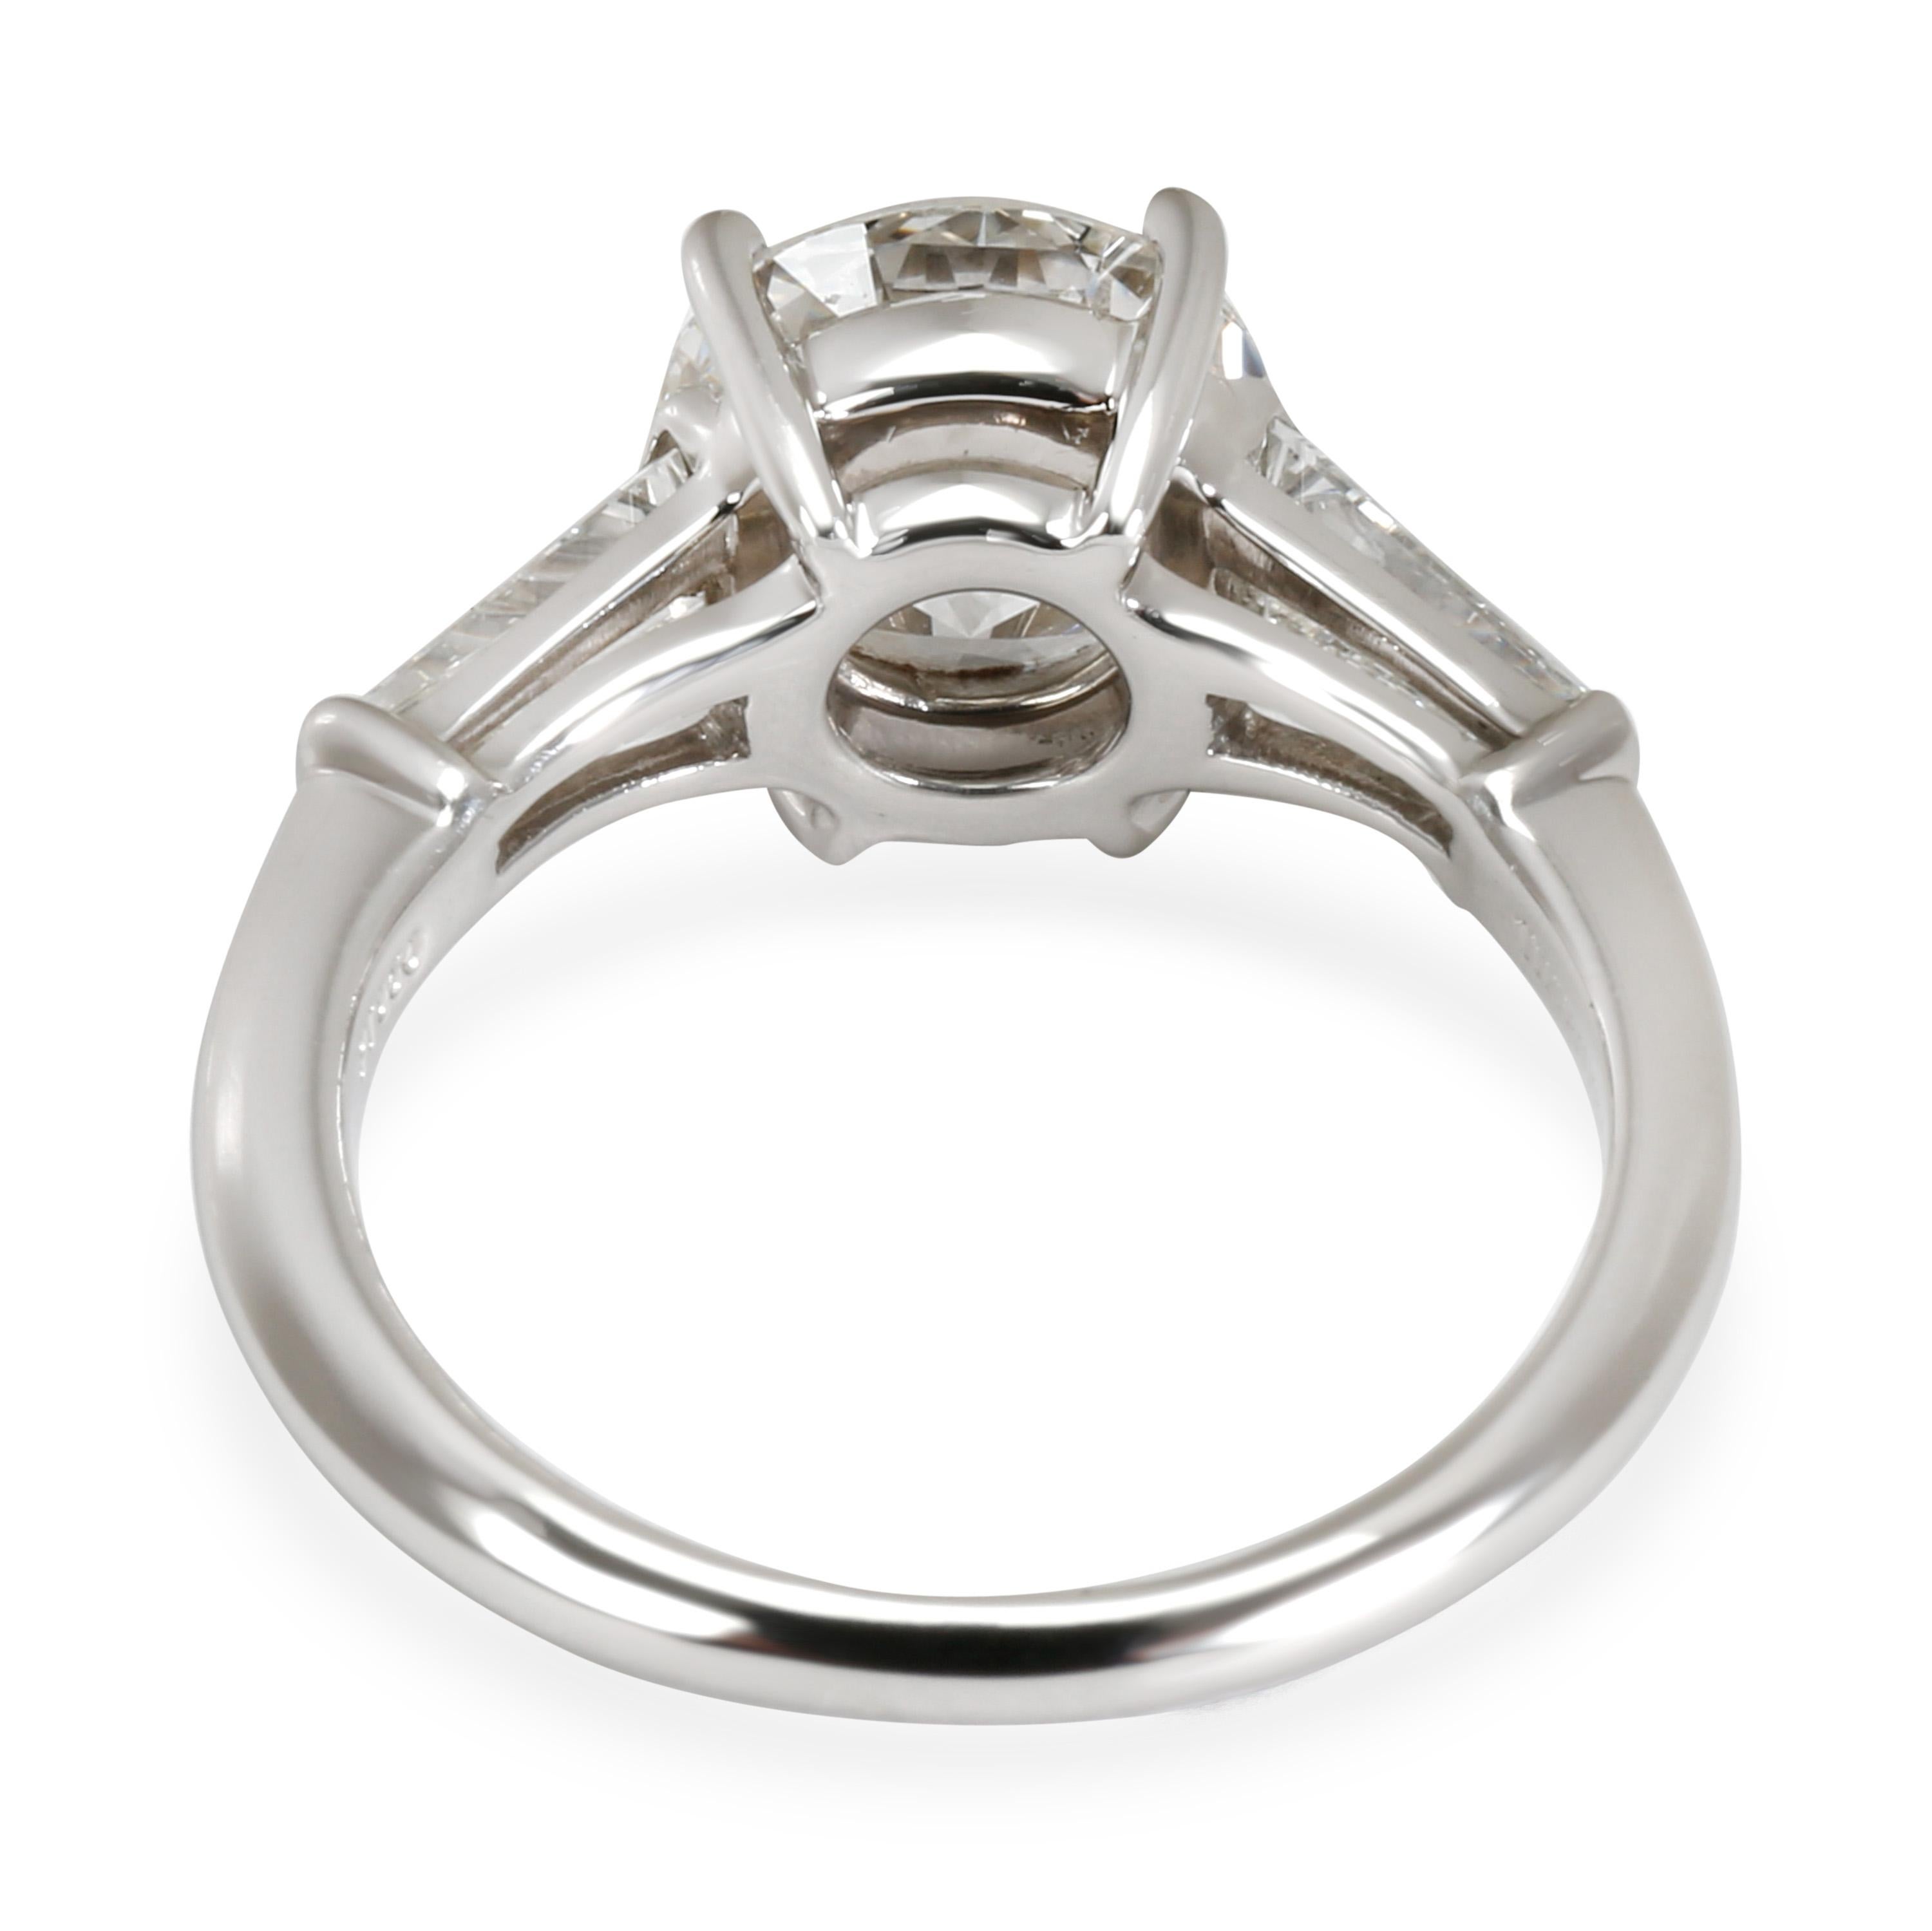 Round Cut Tiffany & Co. Diamond Engagement Ring in Platinum H VS1 3.16 Carat